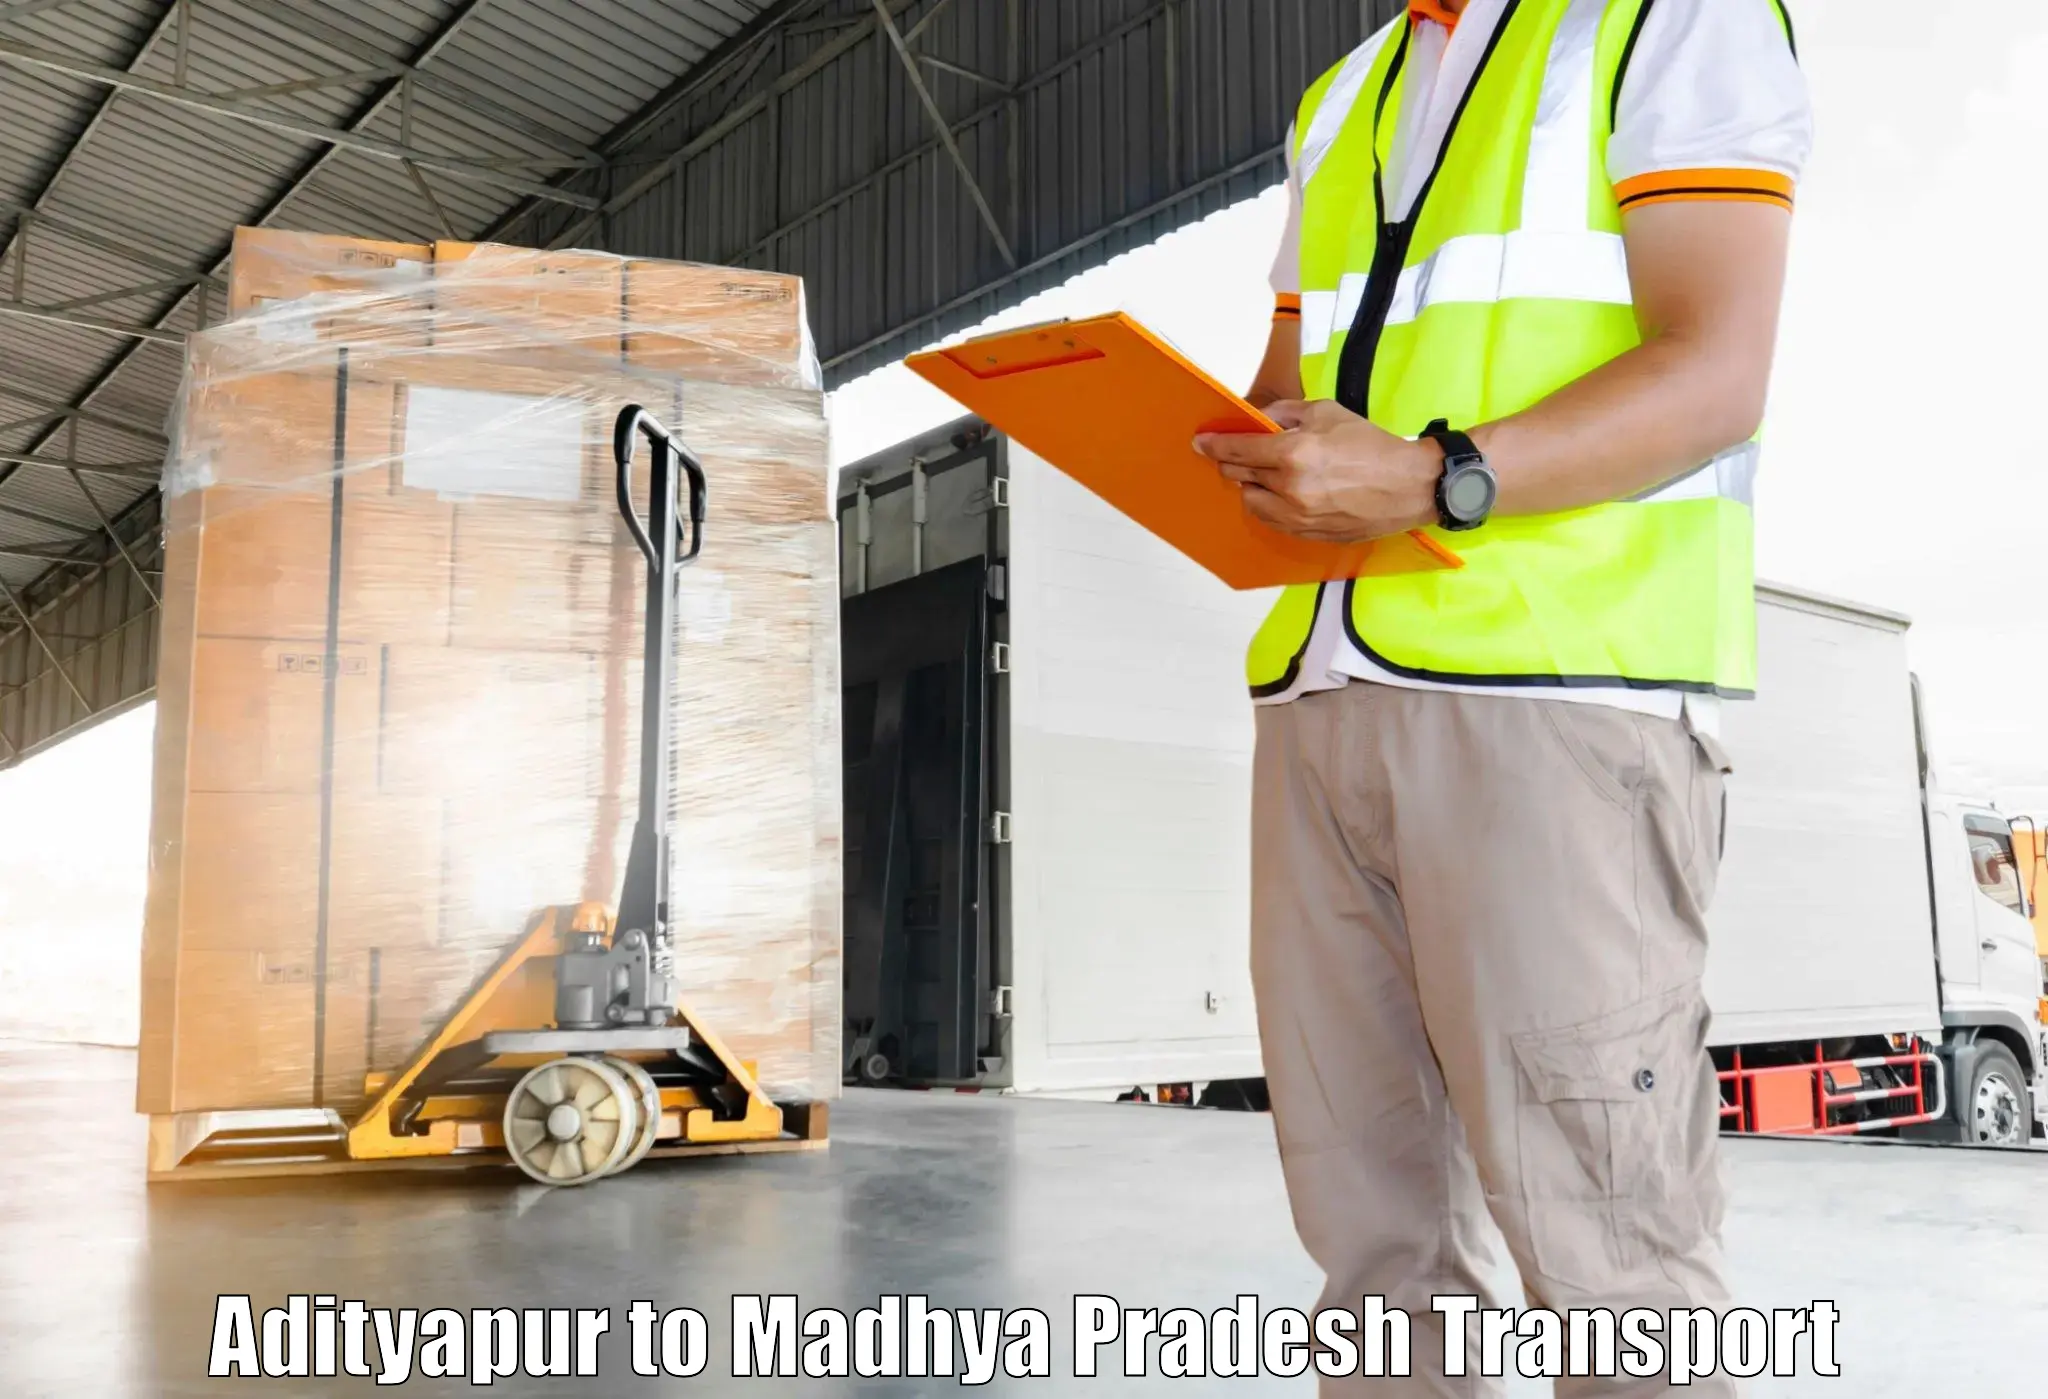 Delivery service Adityapur to Nagda